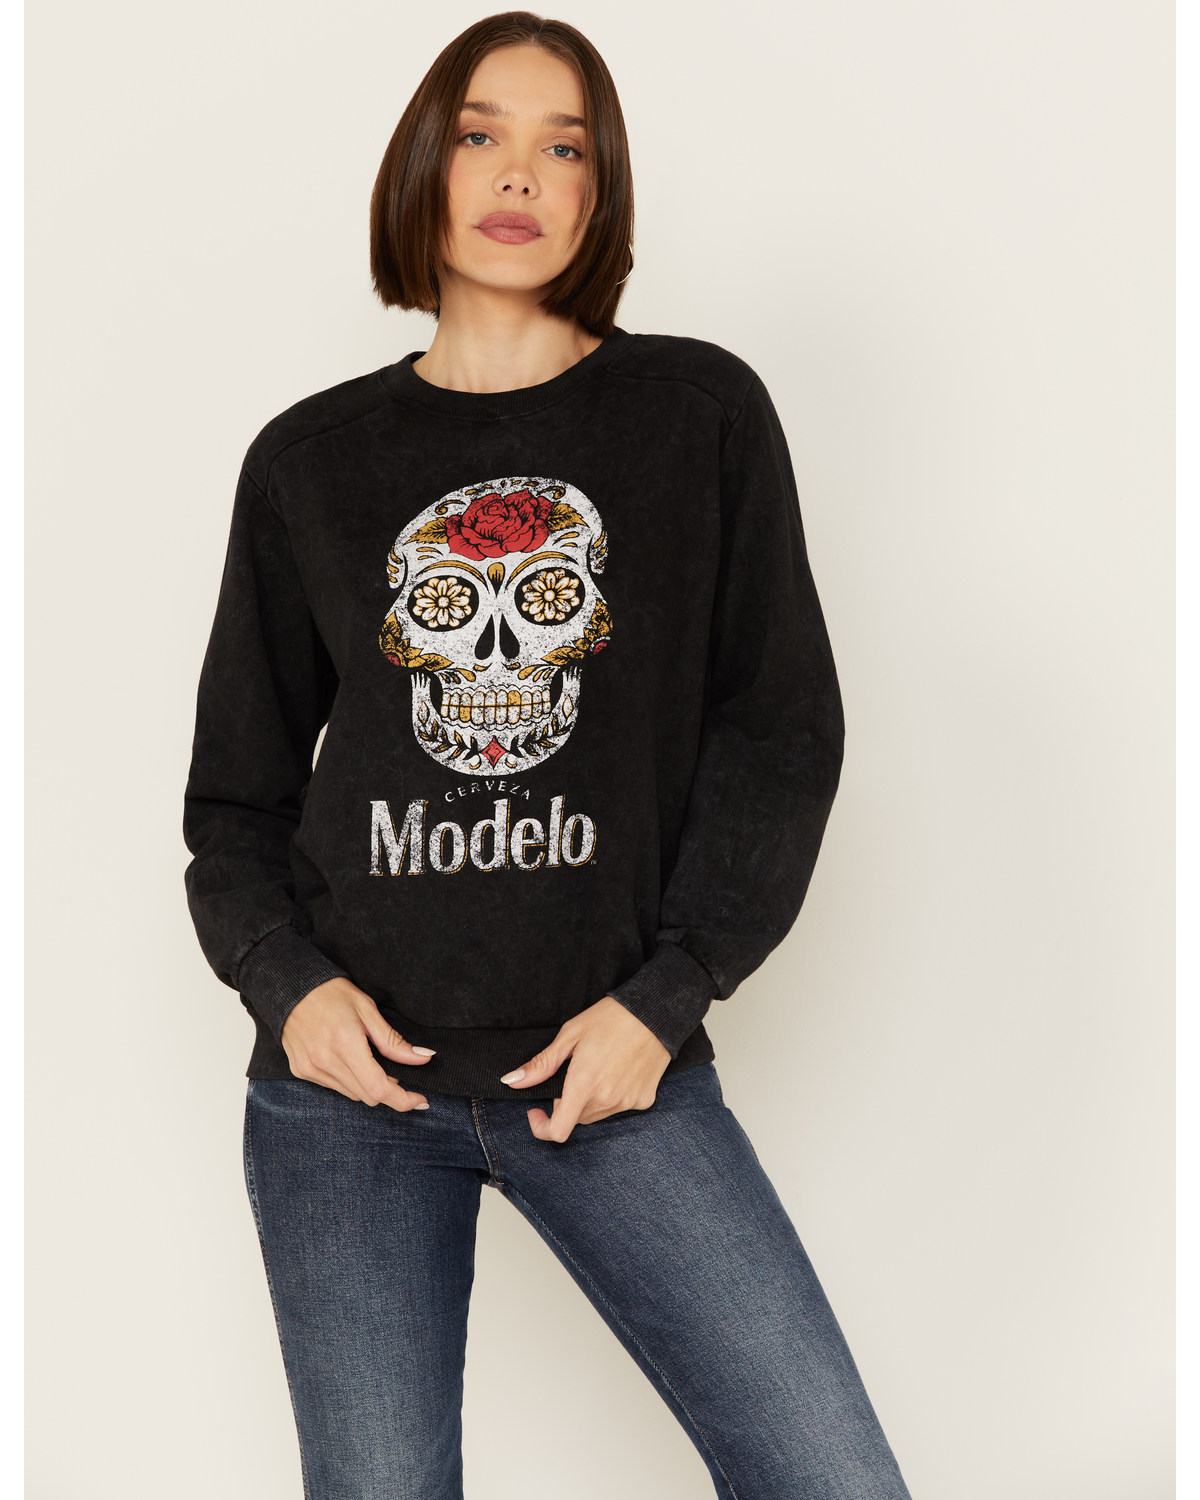 Changes Women's Modelo Day Of The Dead Crewneck Sweatshirt